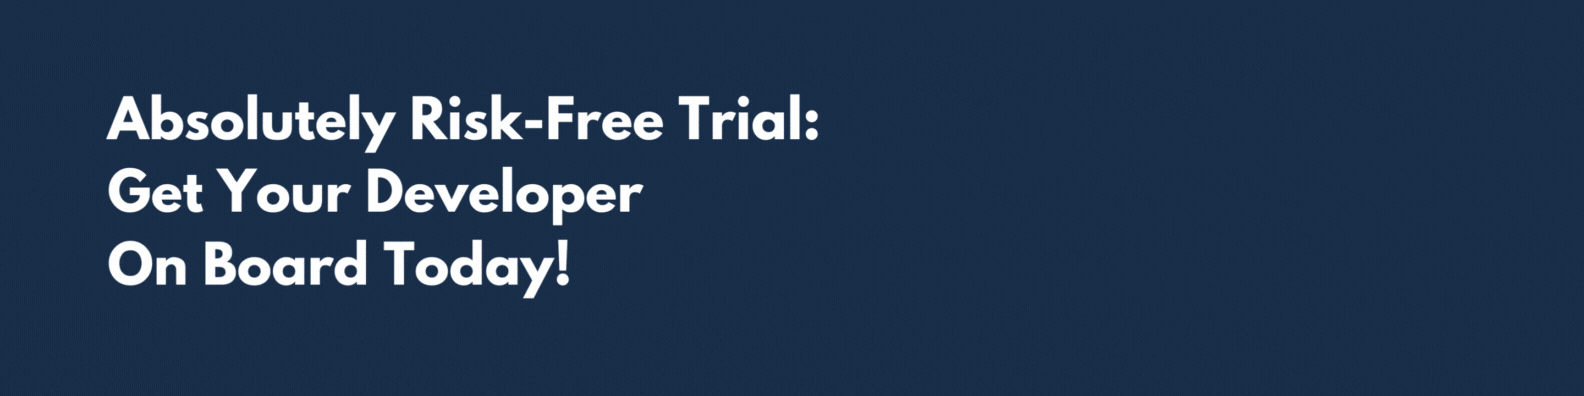 Risk-Free Trial Get Your Developer On Board